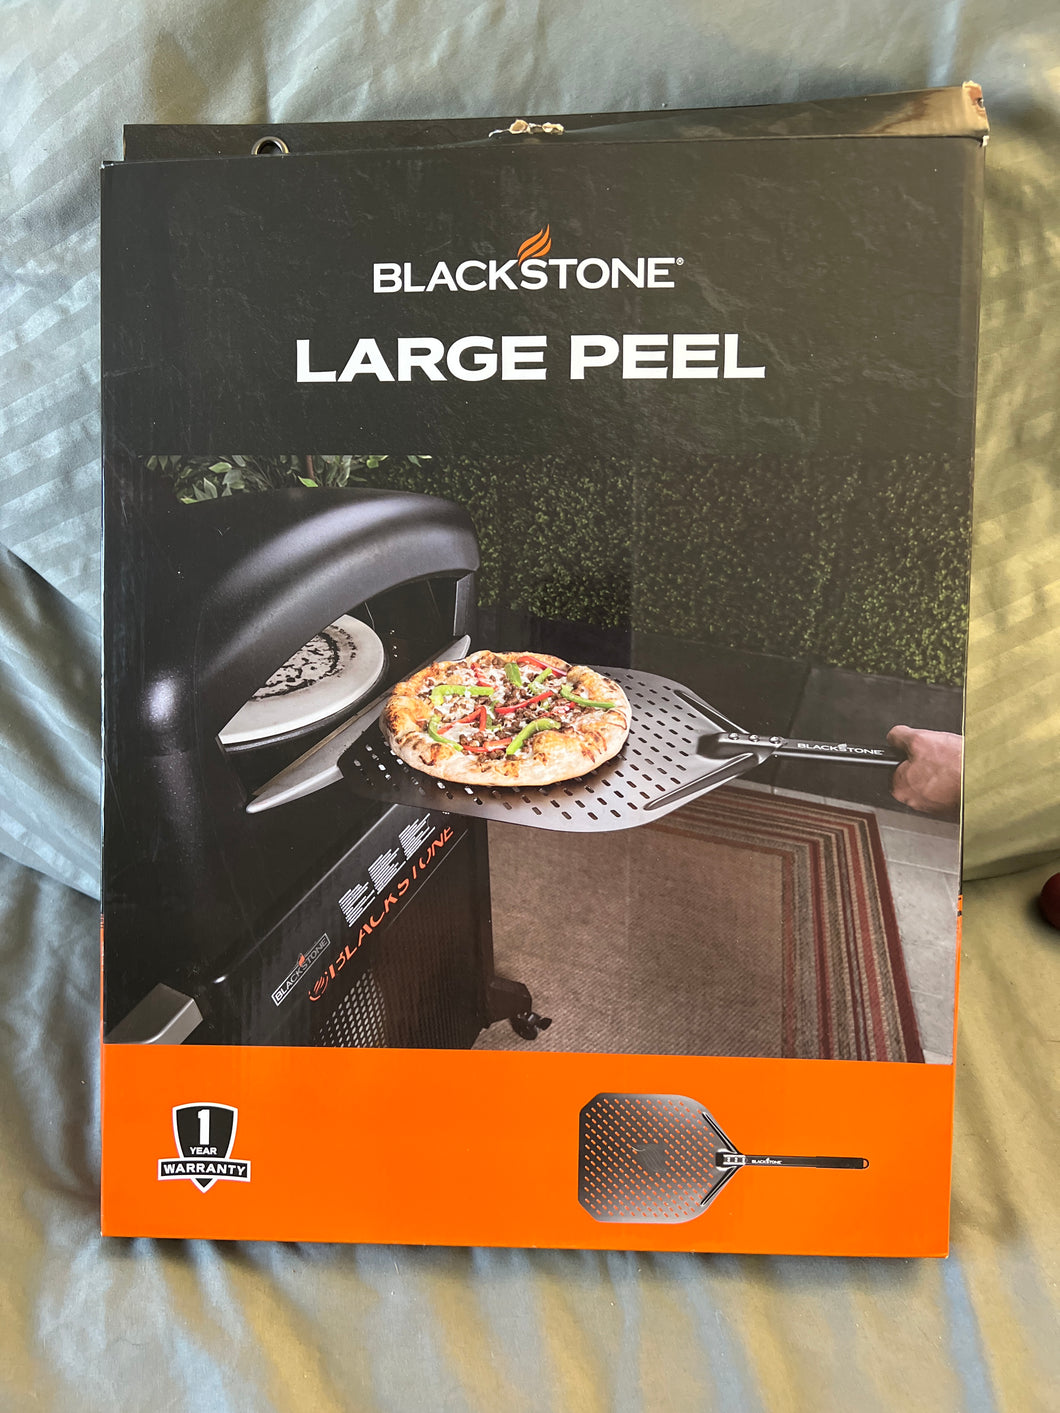 Blackstone large peel for pizzas